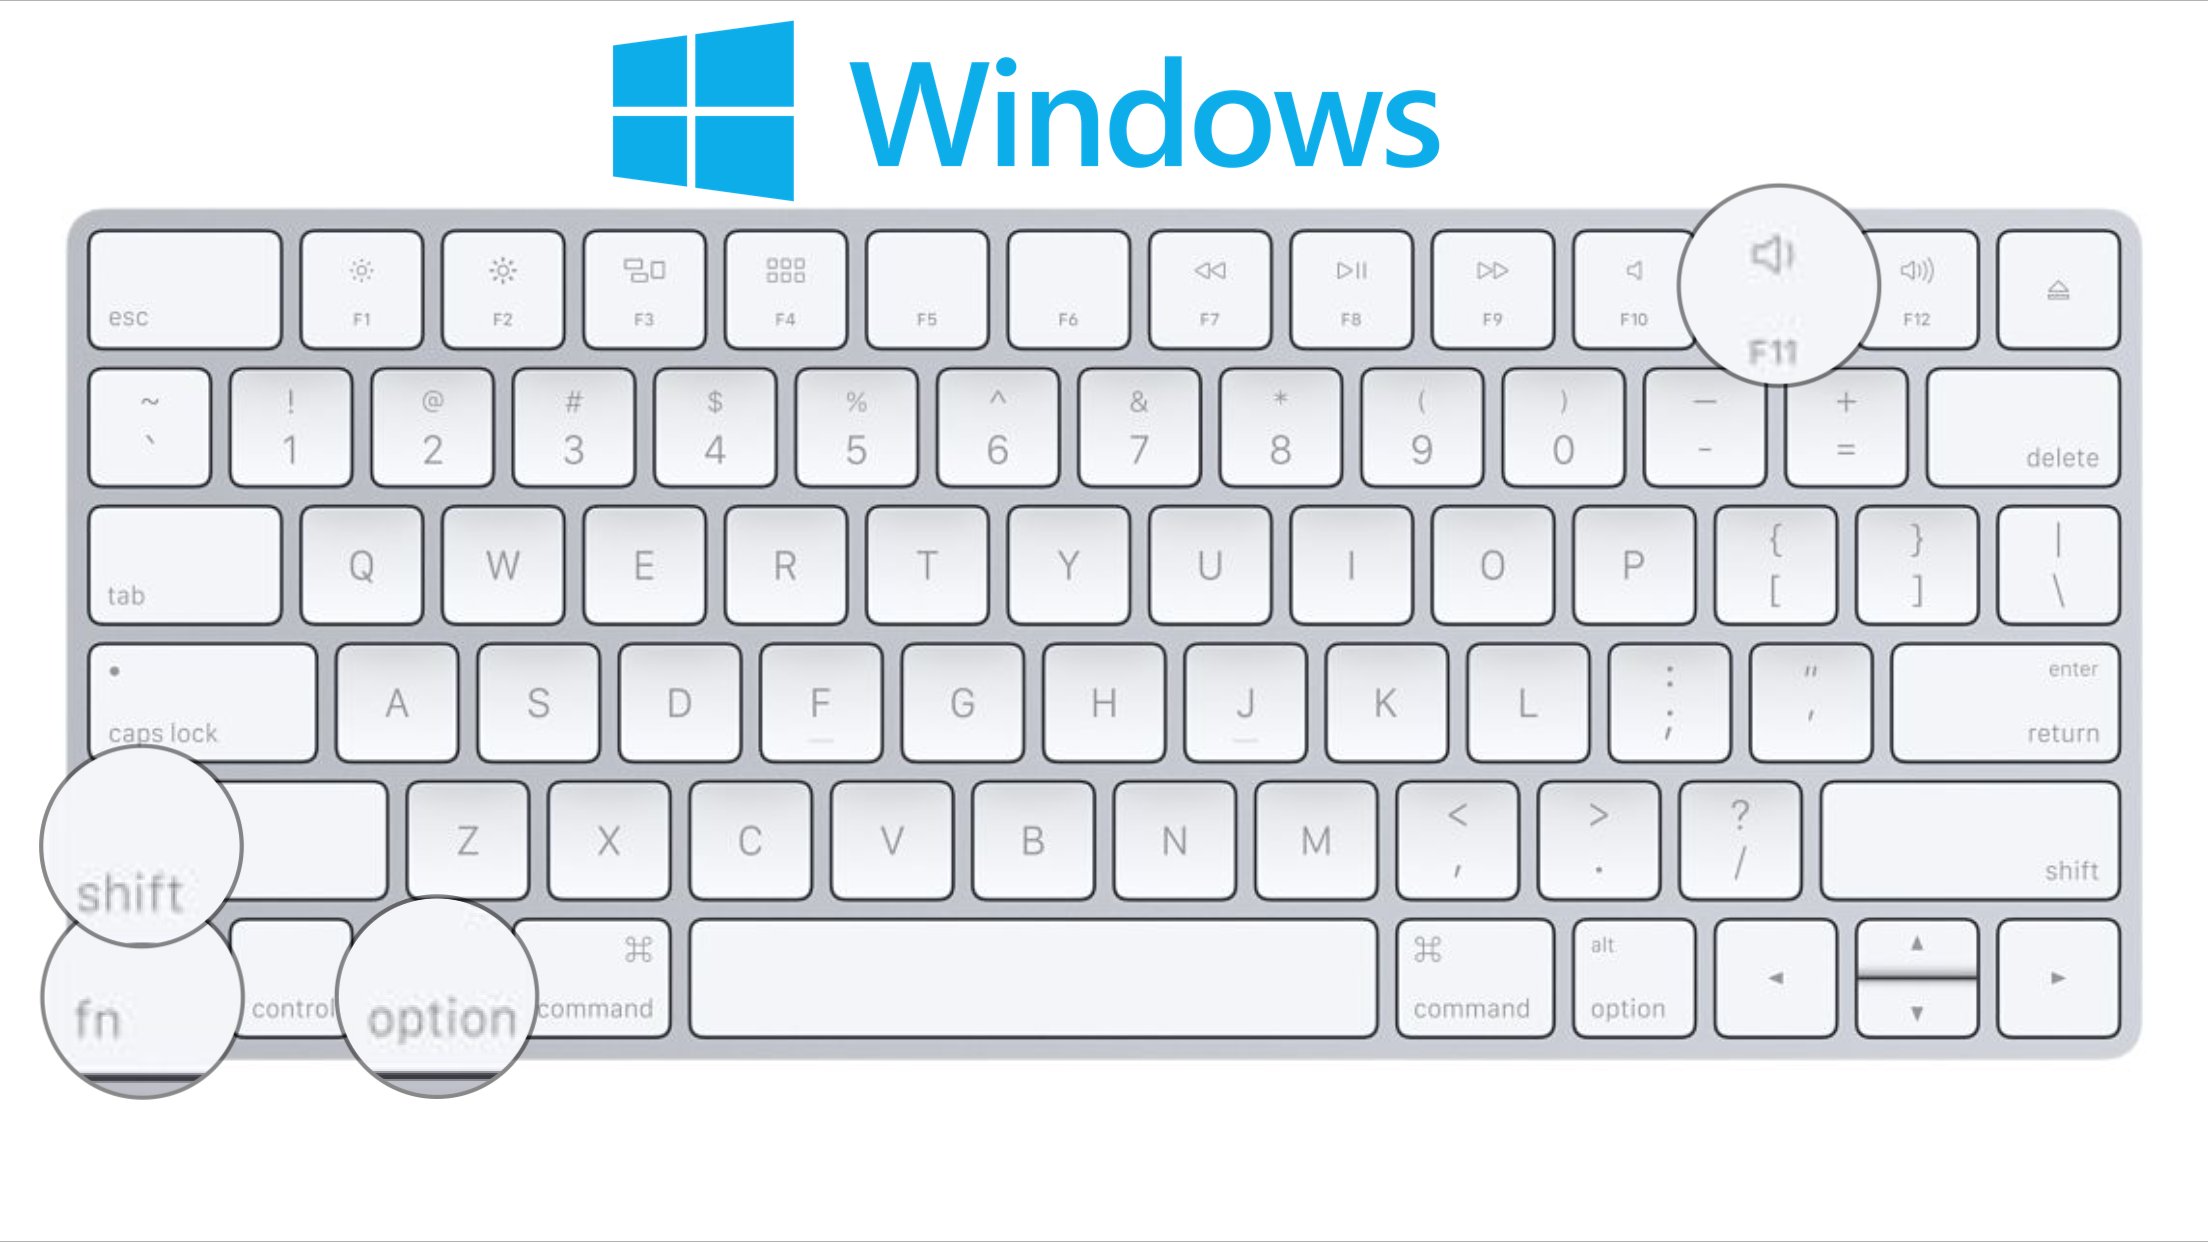 macbook air keyboard not working microsoft window 7